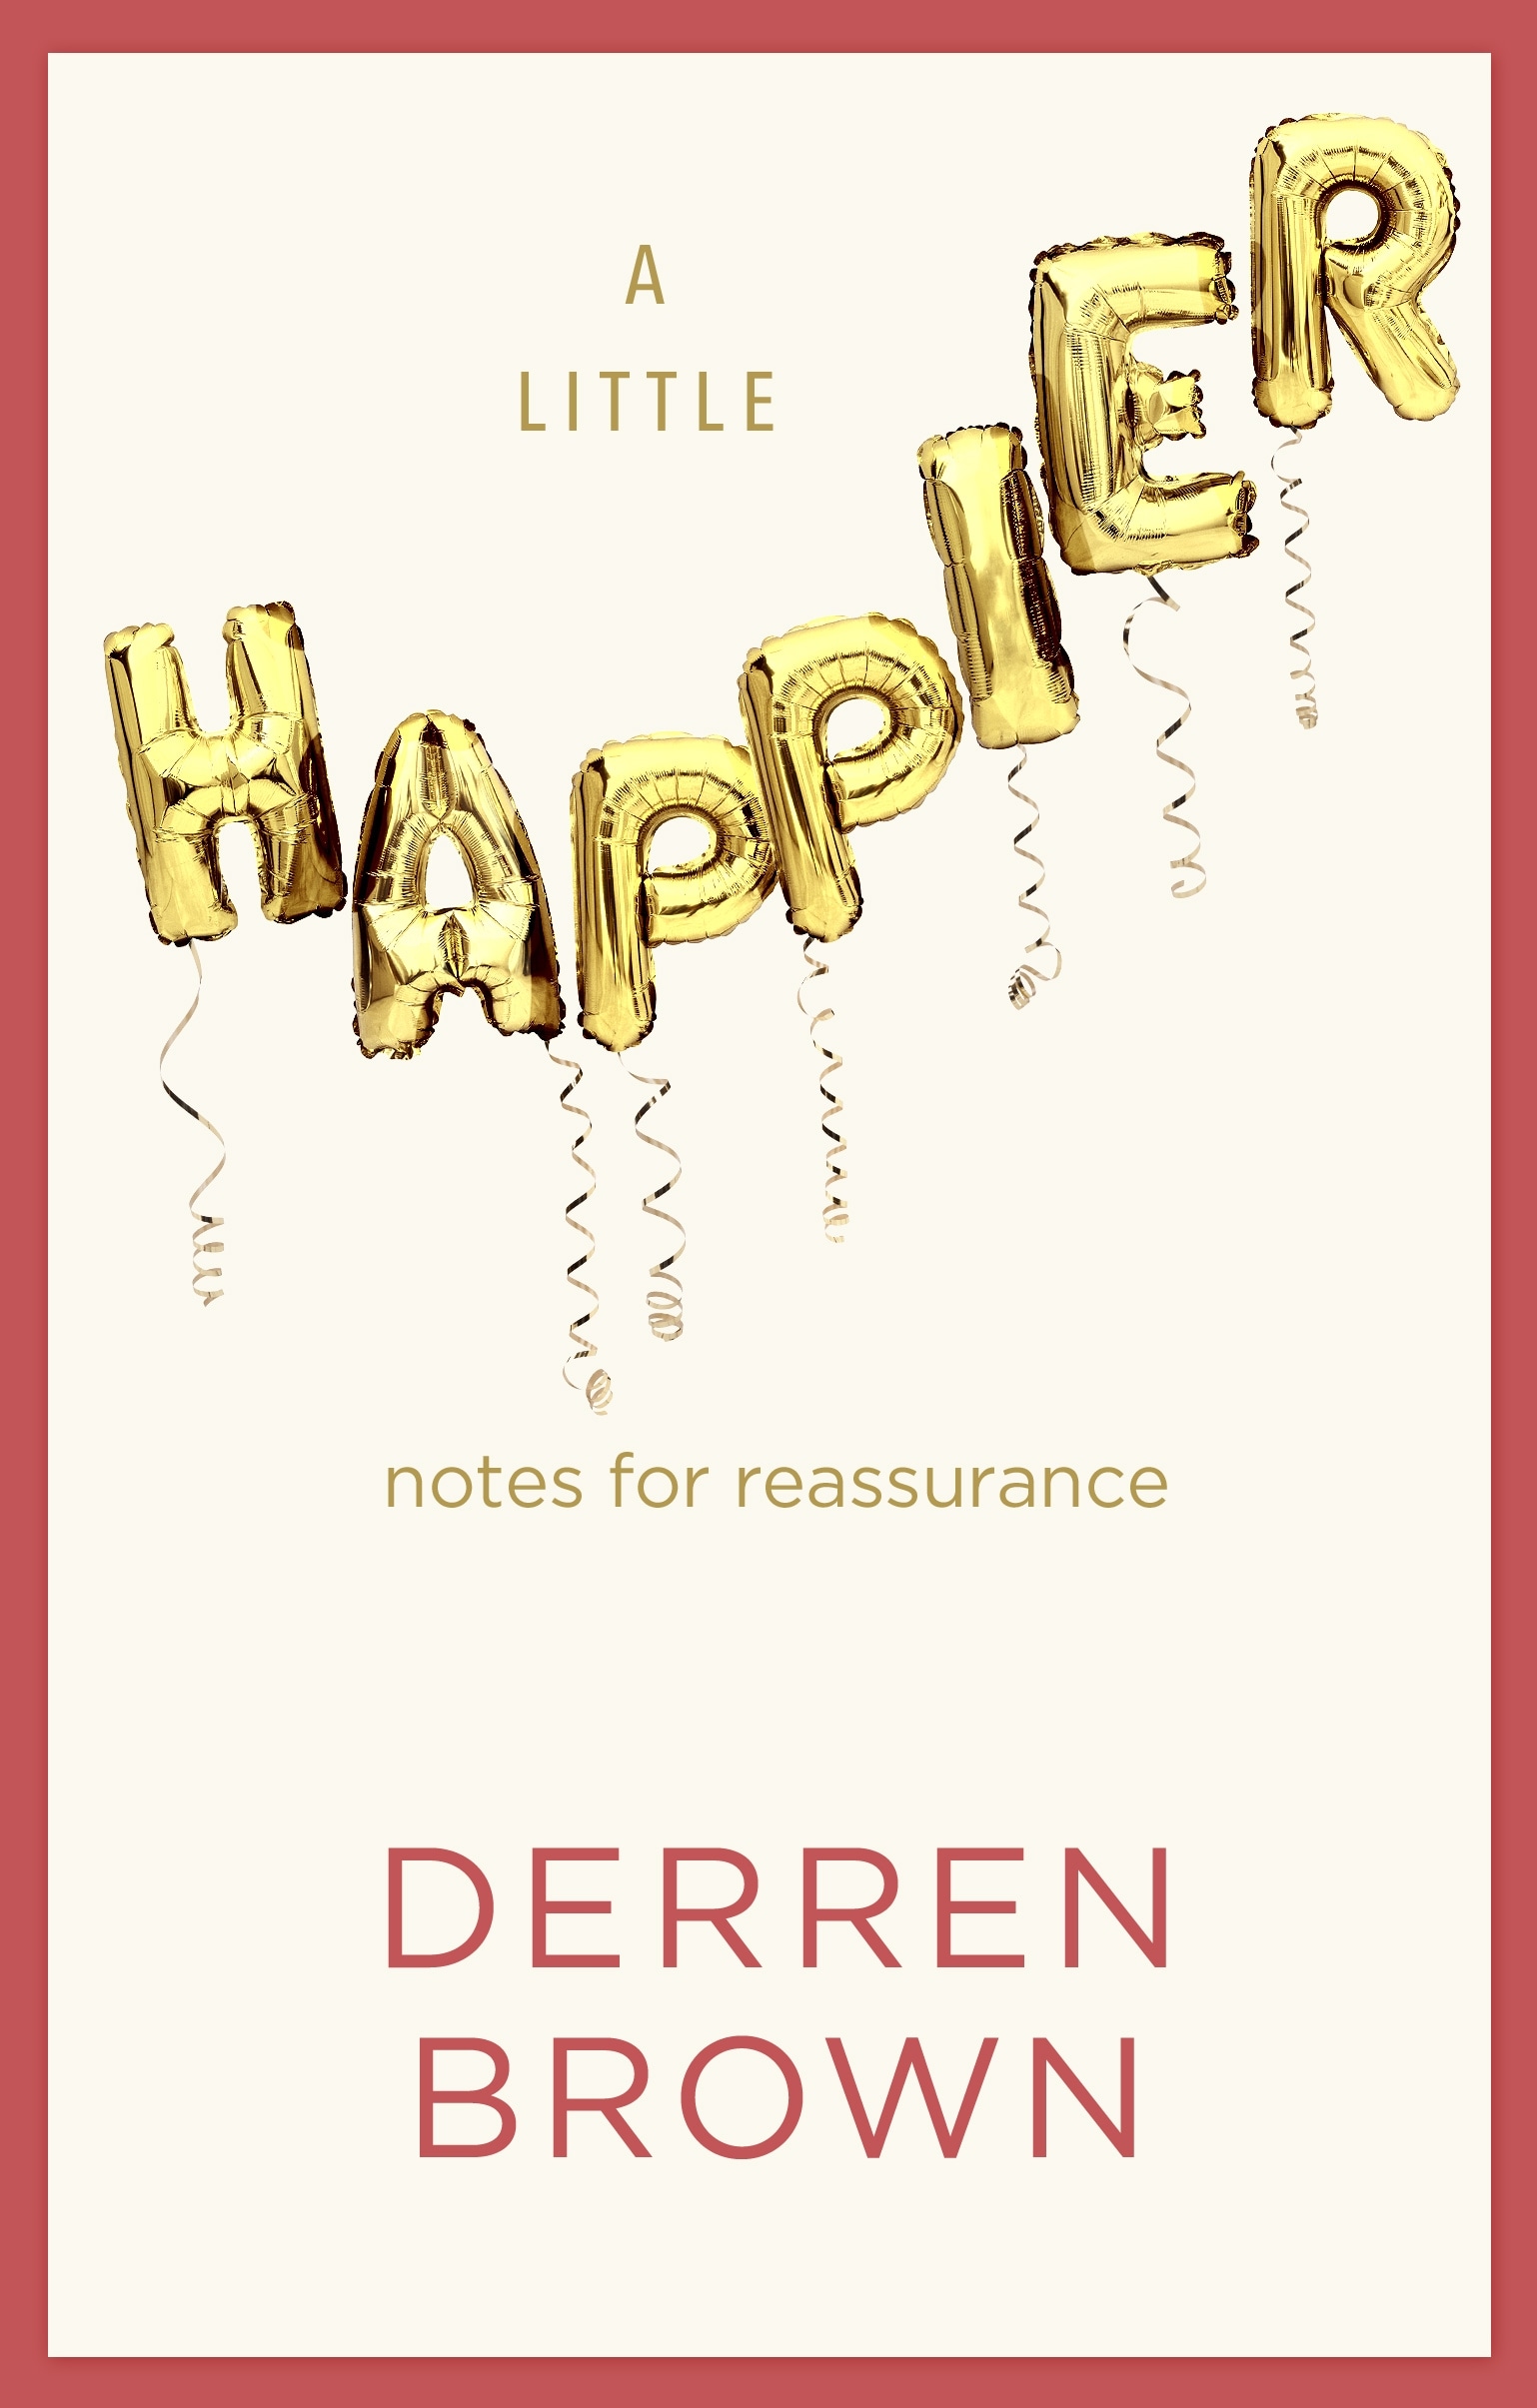 Book “A Little Happier” by Derren Brown — October 15, 2020